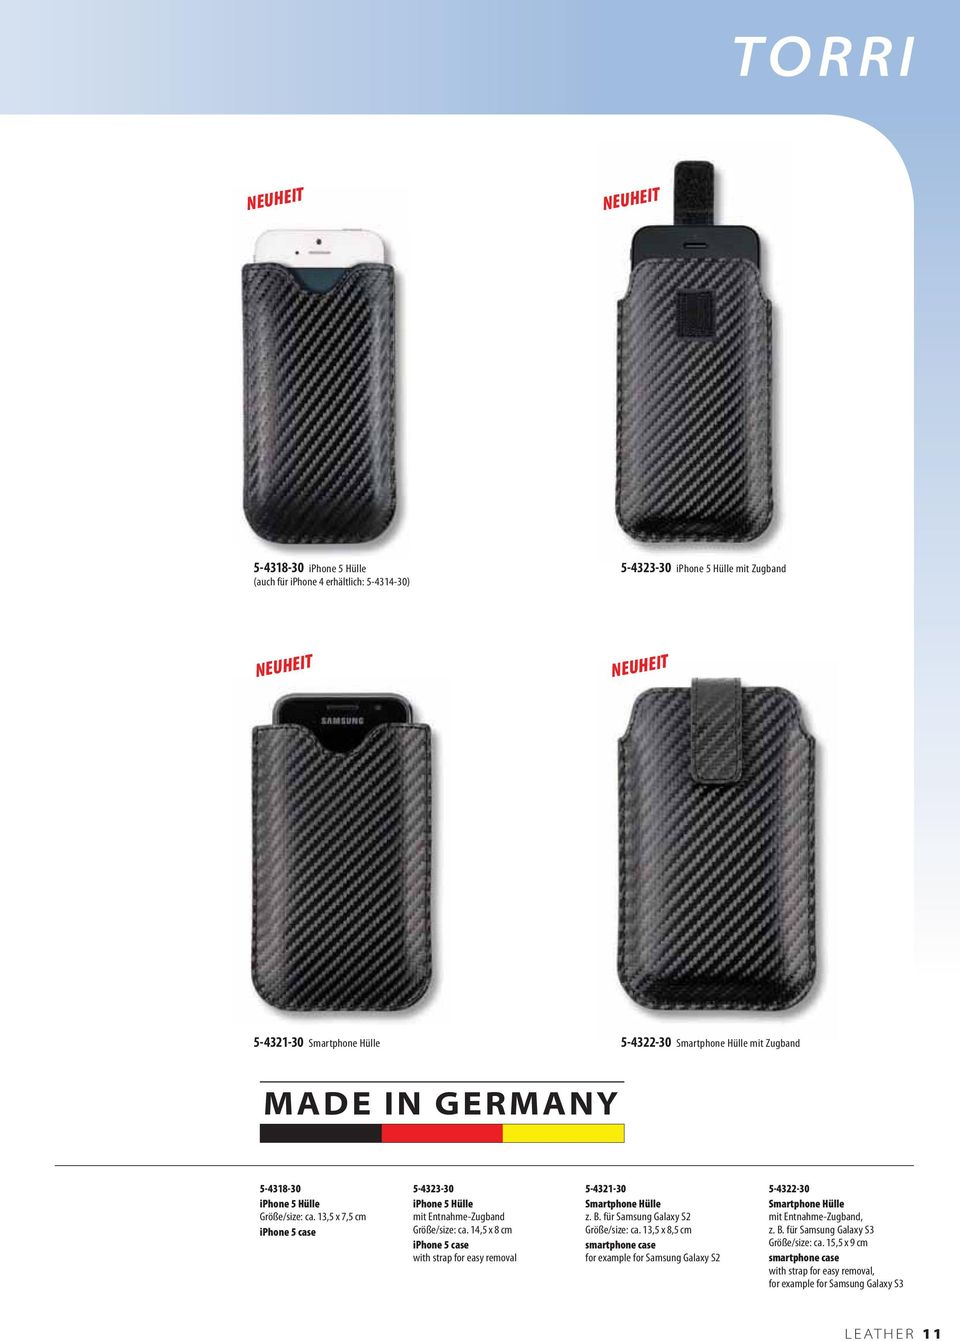 14,5 x 8 cm iphone 5 case with strap for easy removal 5-4321-30 Smartphone Hülle z. B. für Samsung Galaxy S2 Größe/size: ca.